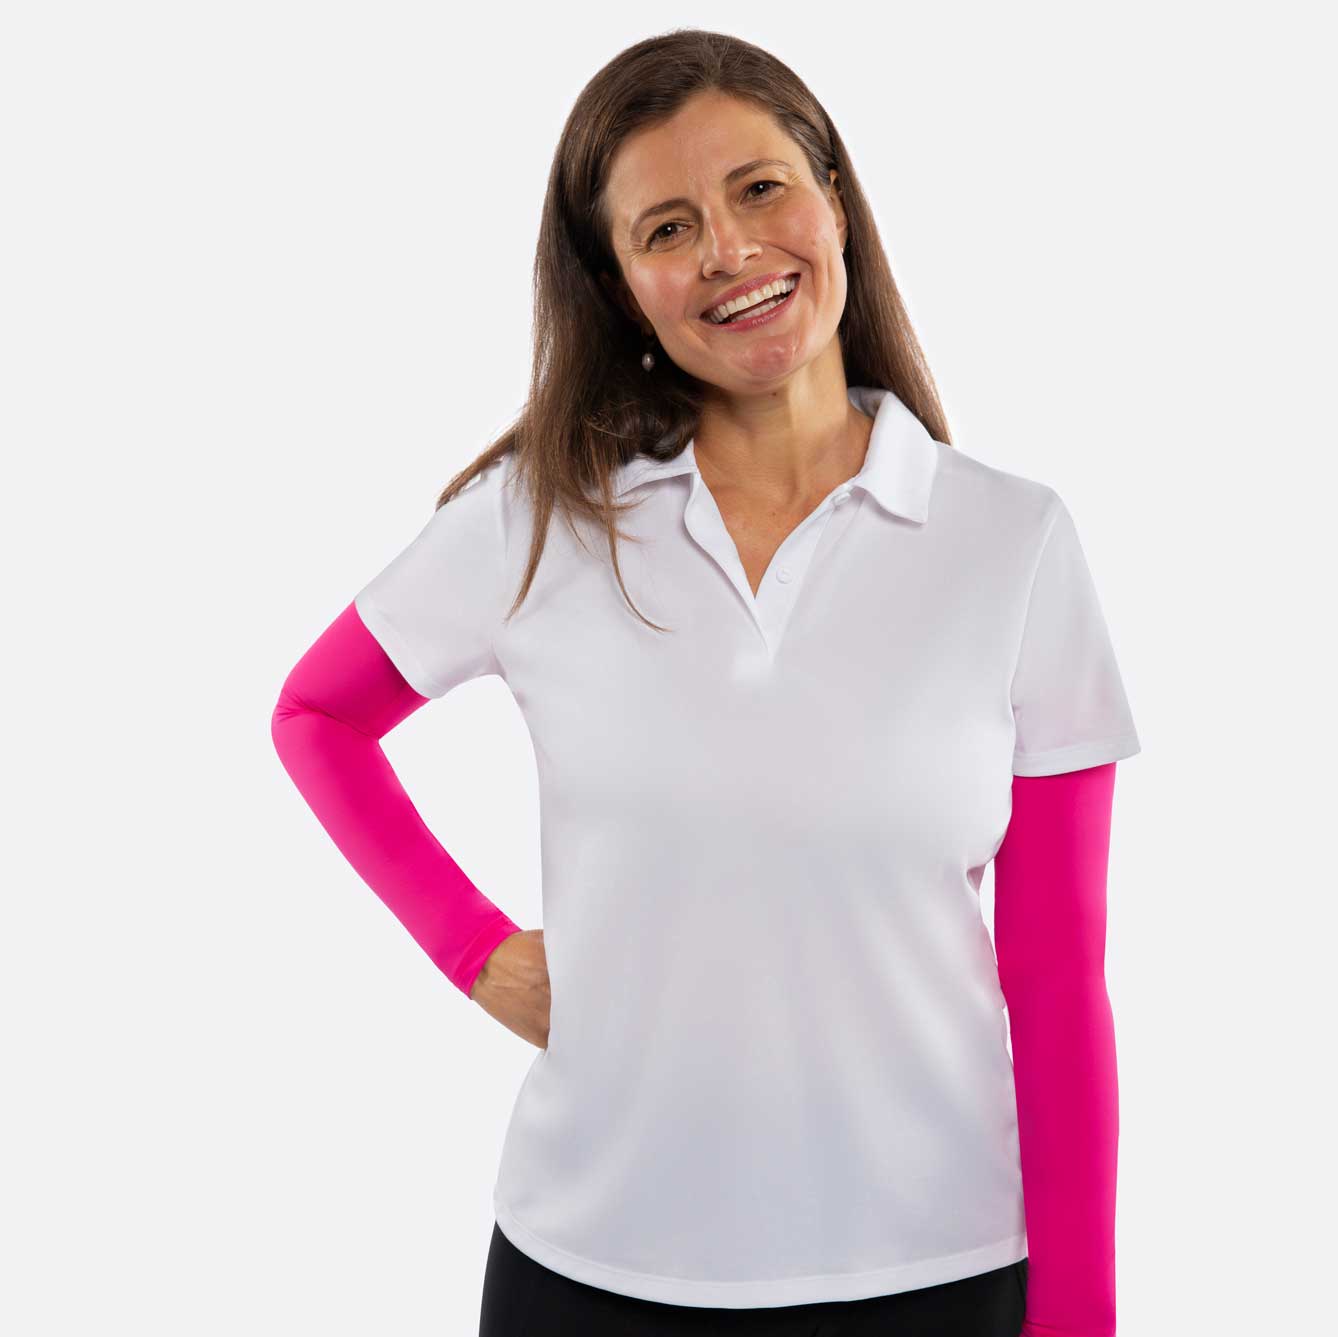 pink arm sleeves woman